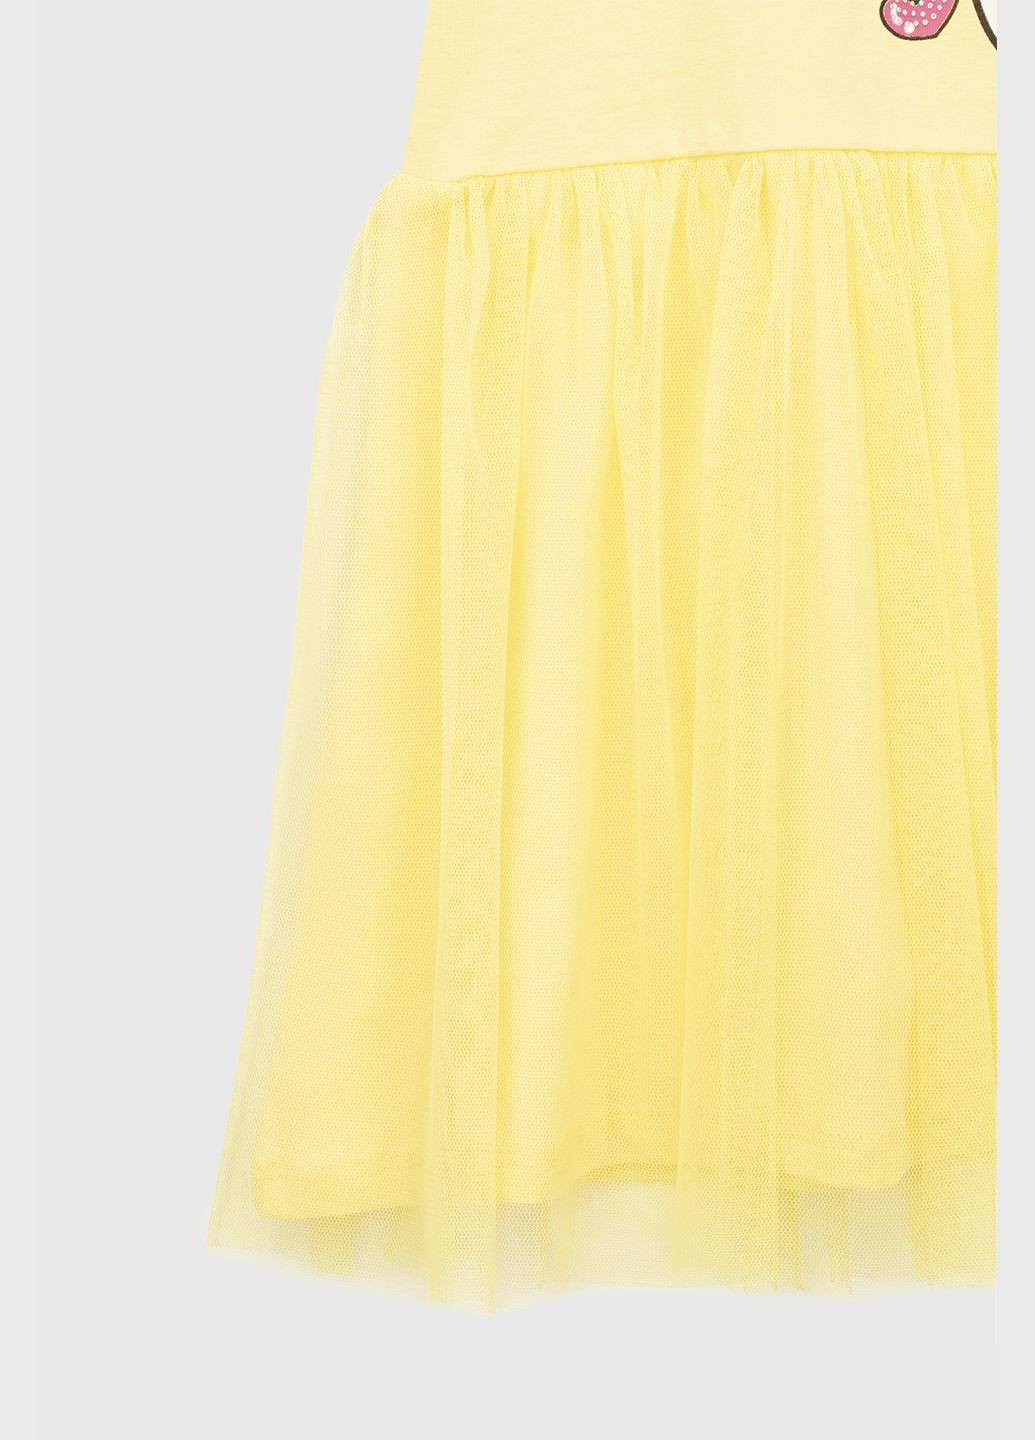 Жёлтое платье Ecrin (282746519)